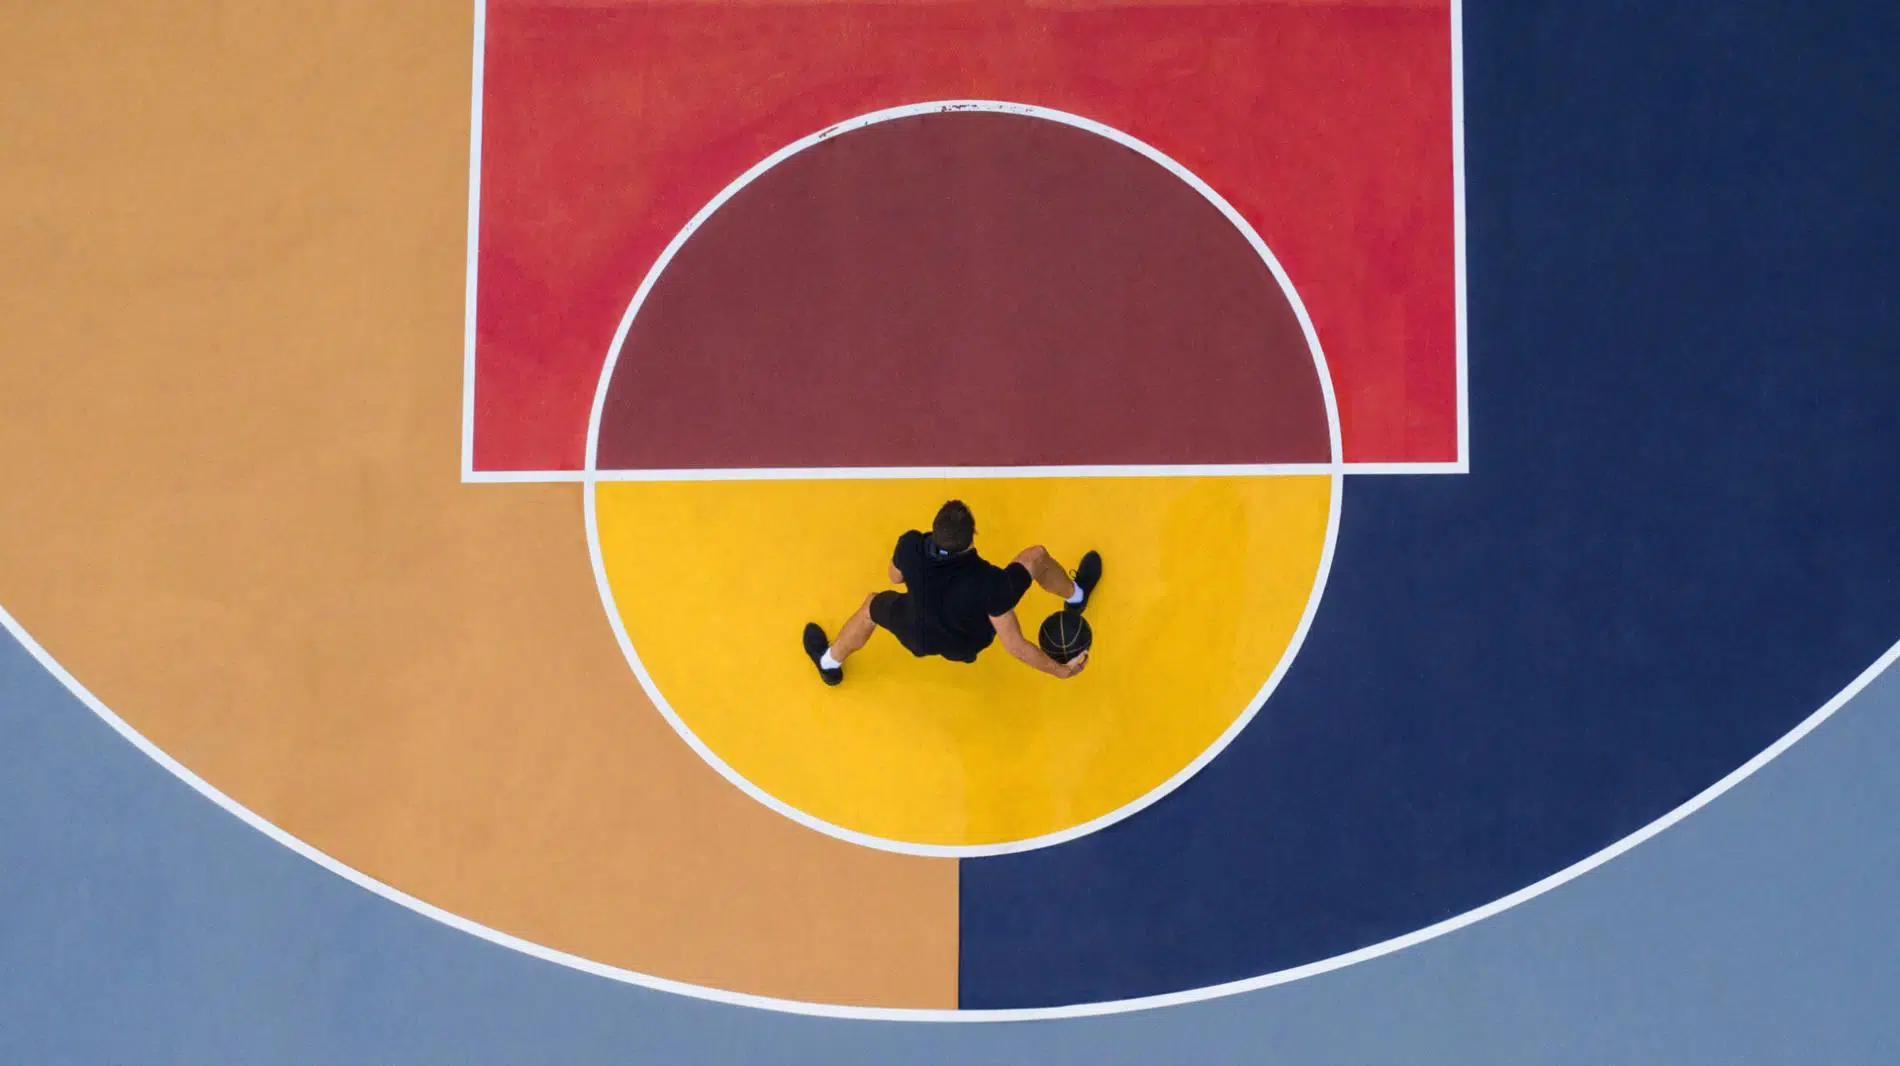 fotografia aerea de persona jugando baloncesto sobre fopndo de colores por Ilanna Barkusky